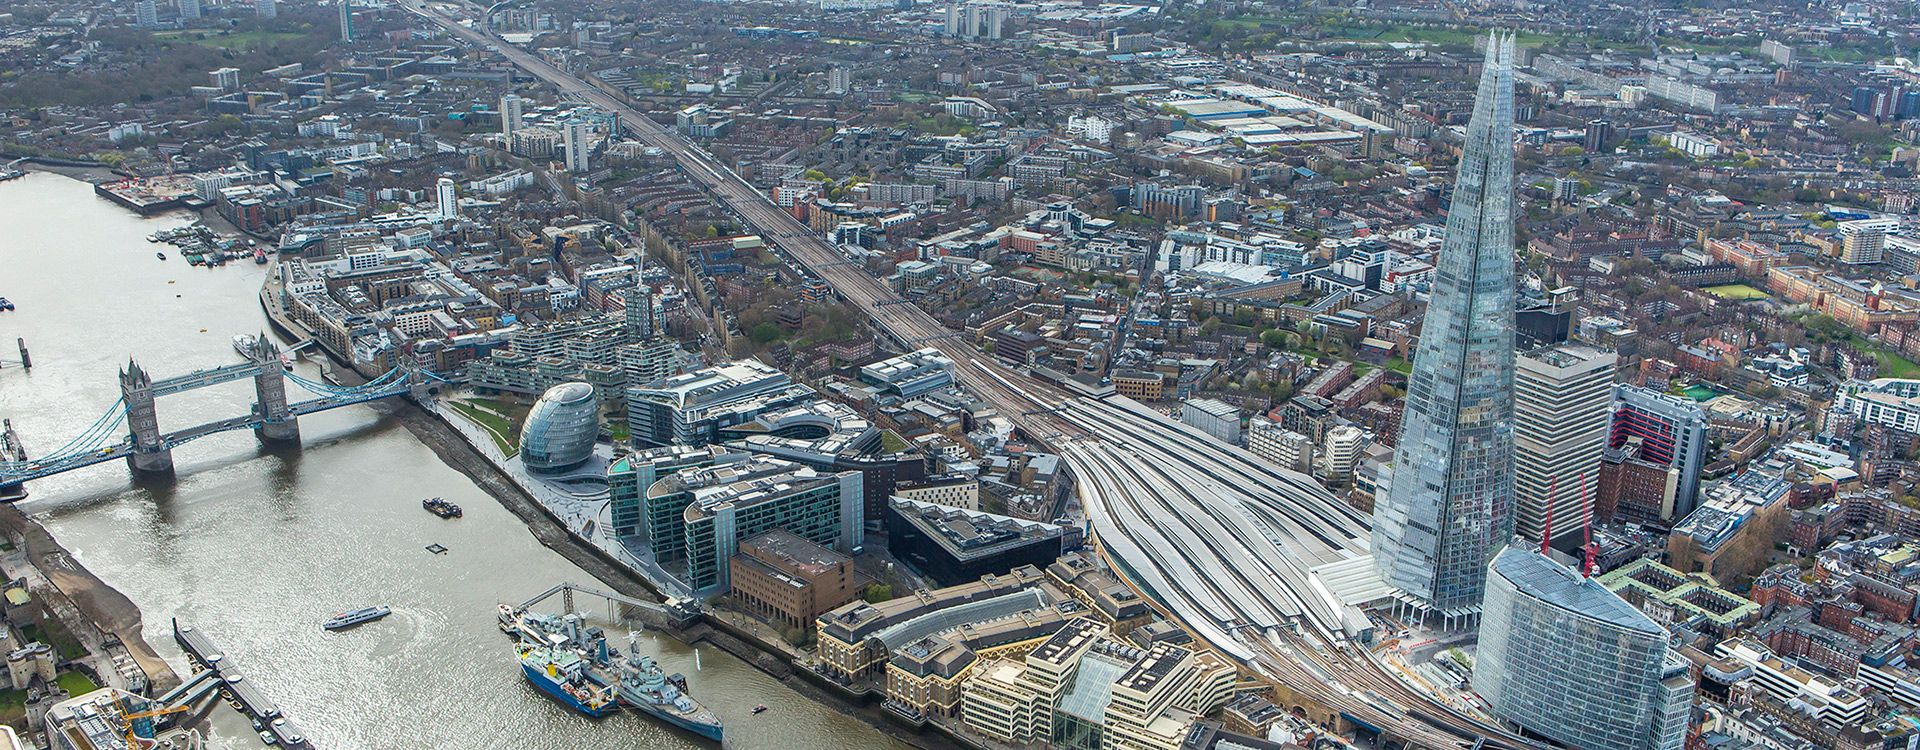 LOWERY LTD LONDON BRIDGE THAMESLINK PROJECT XMAS WORKS – 2020/2021